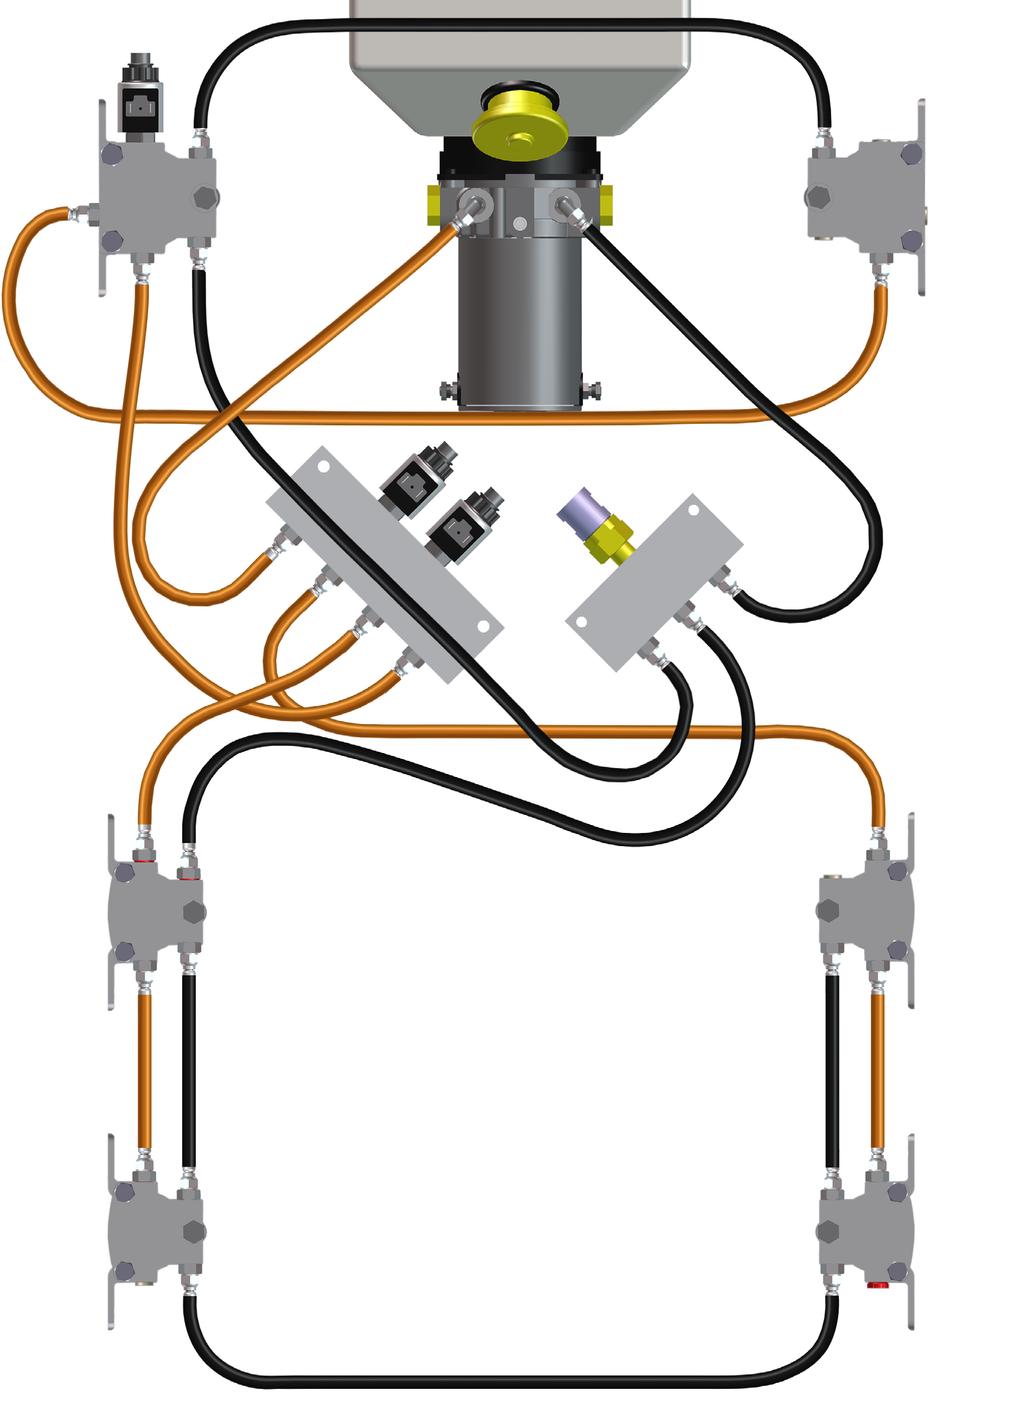 Plumbing Diagram Valve Power unit A B Landing Gear Extend Valve Block C Pressure Switch Valve D Landing Gear